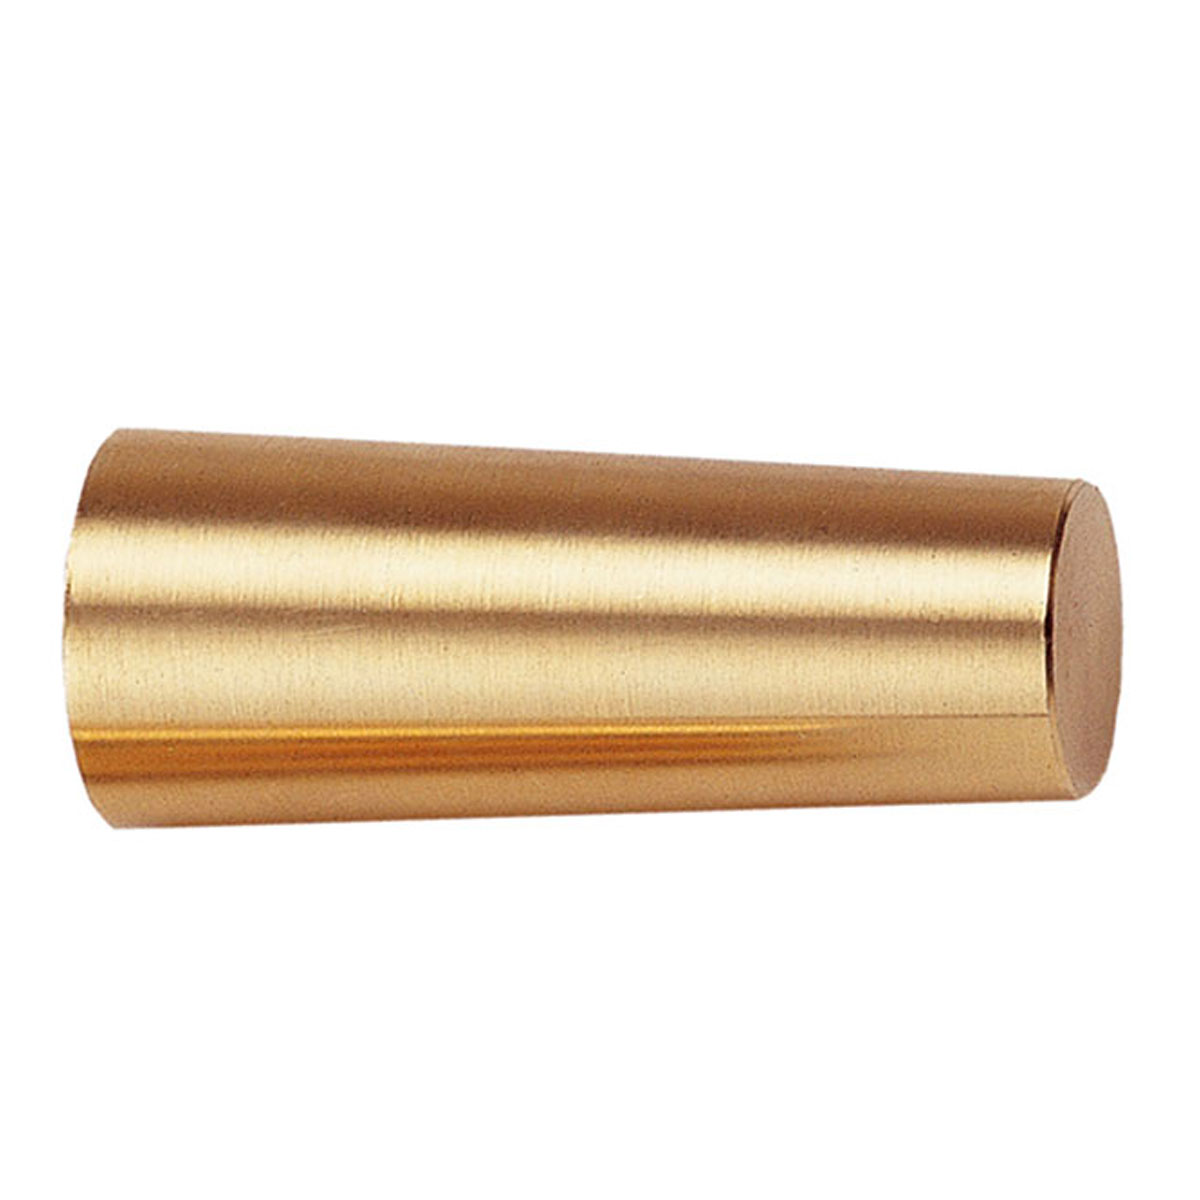 Brass Tube Plug For Tubes 25.4mm OD & BWG 15-22